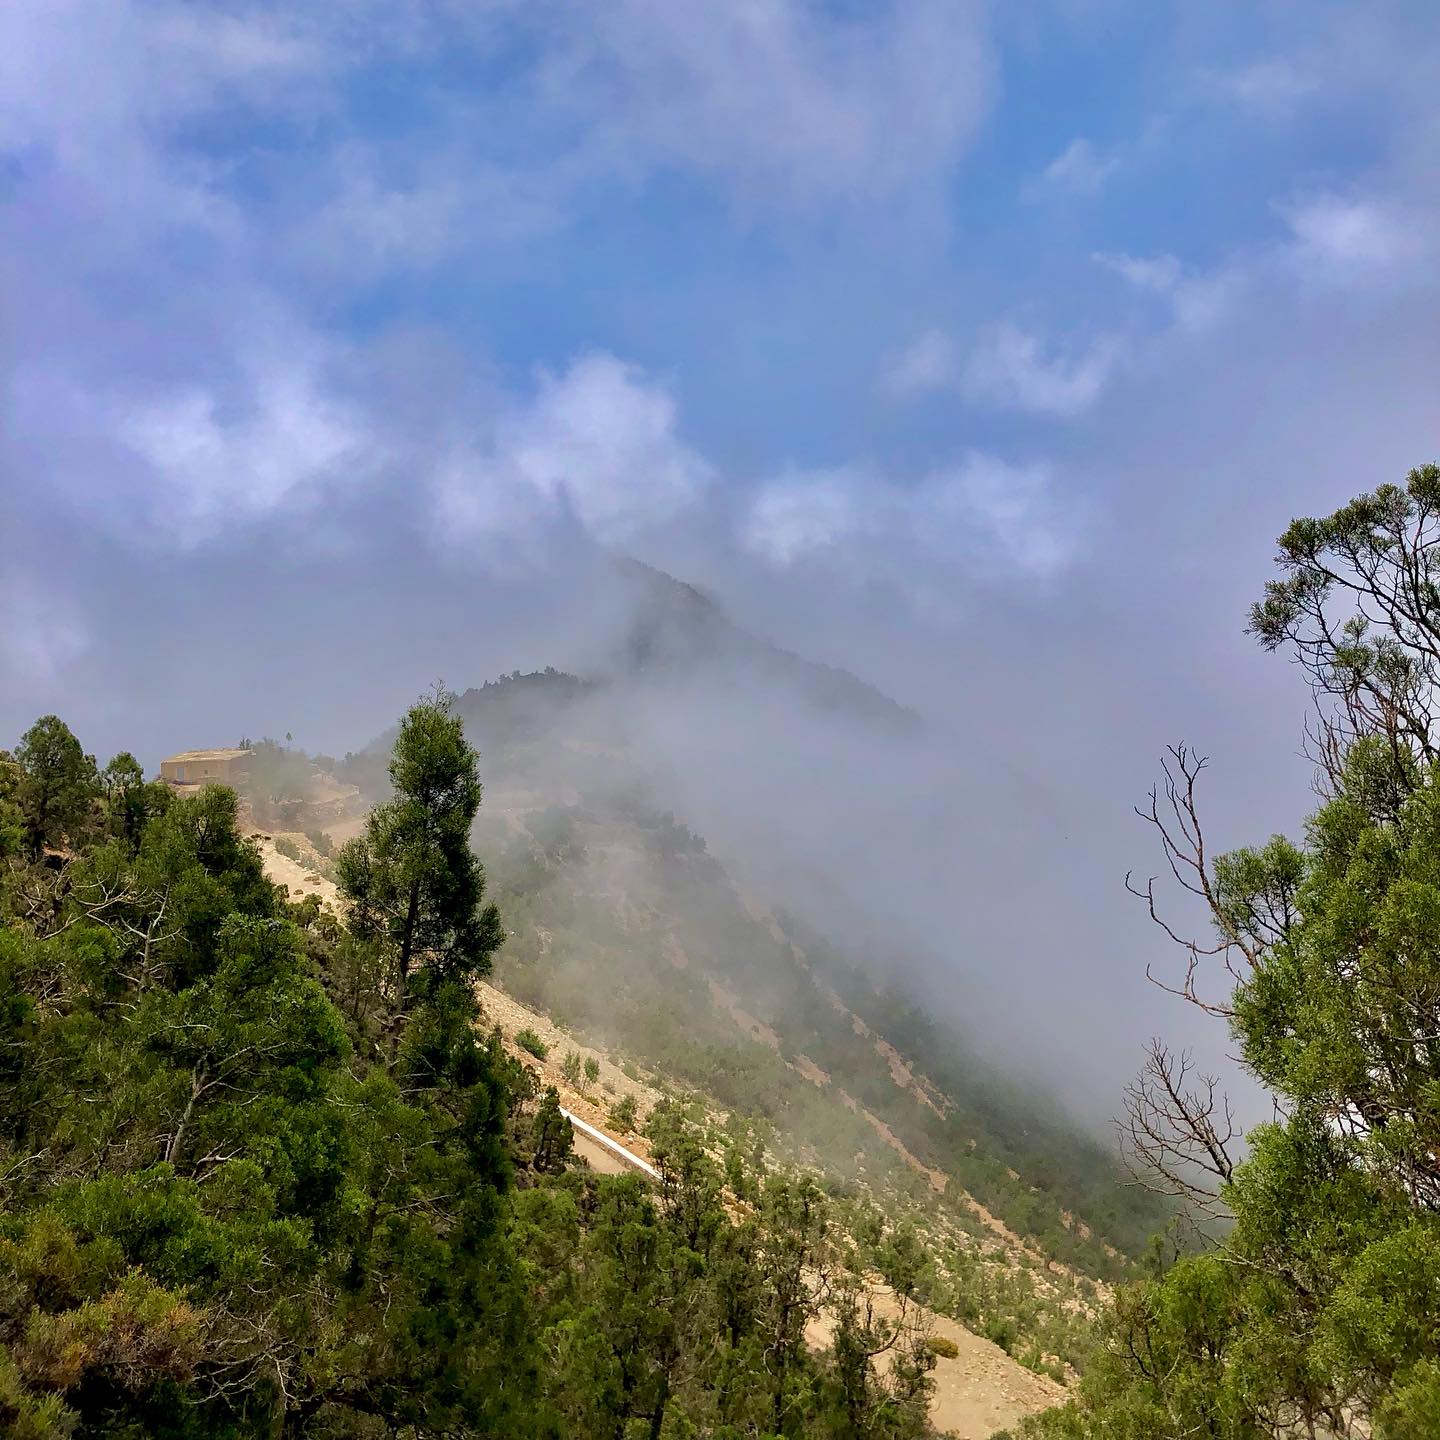 Hiking in Hidden Paradise Valley , Agadir